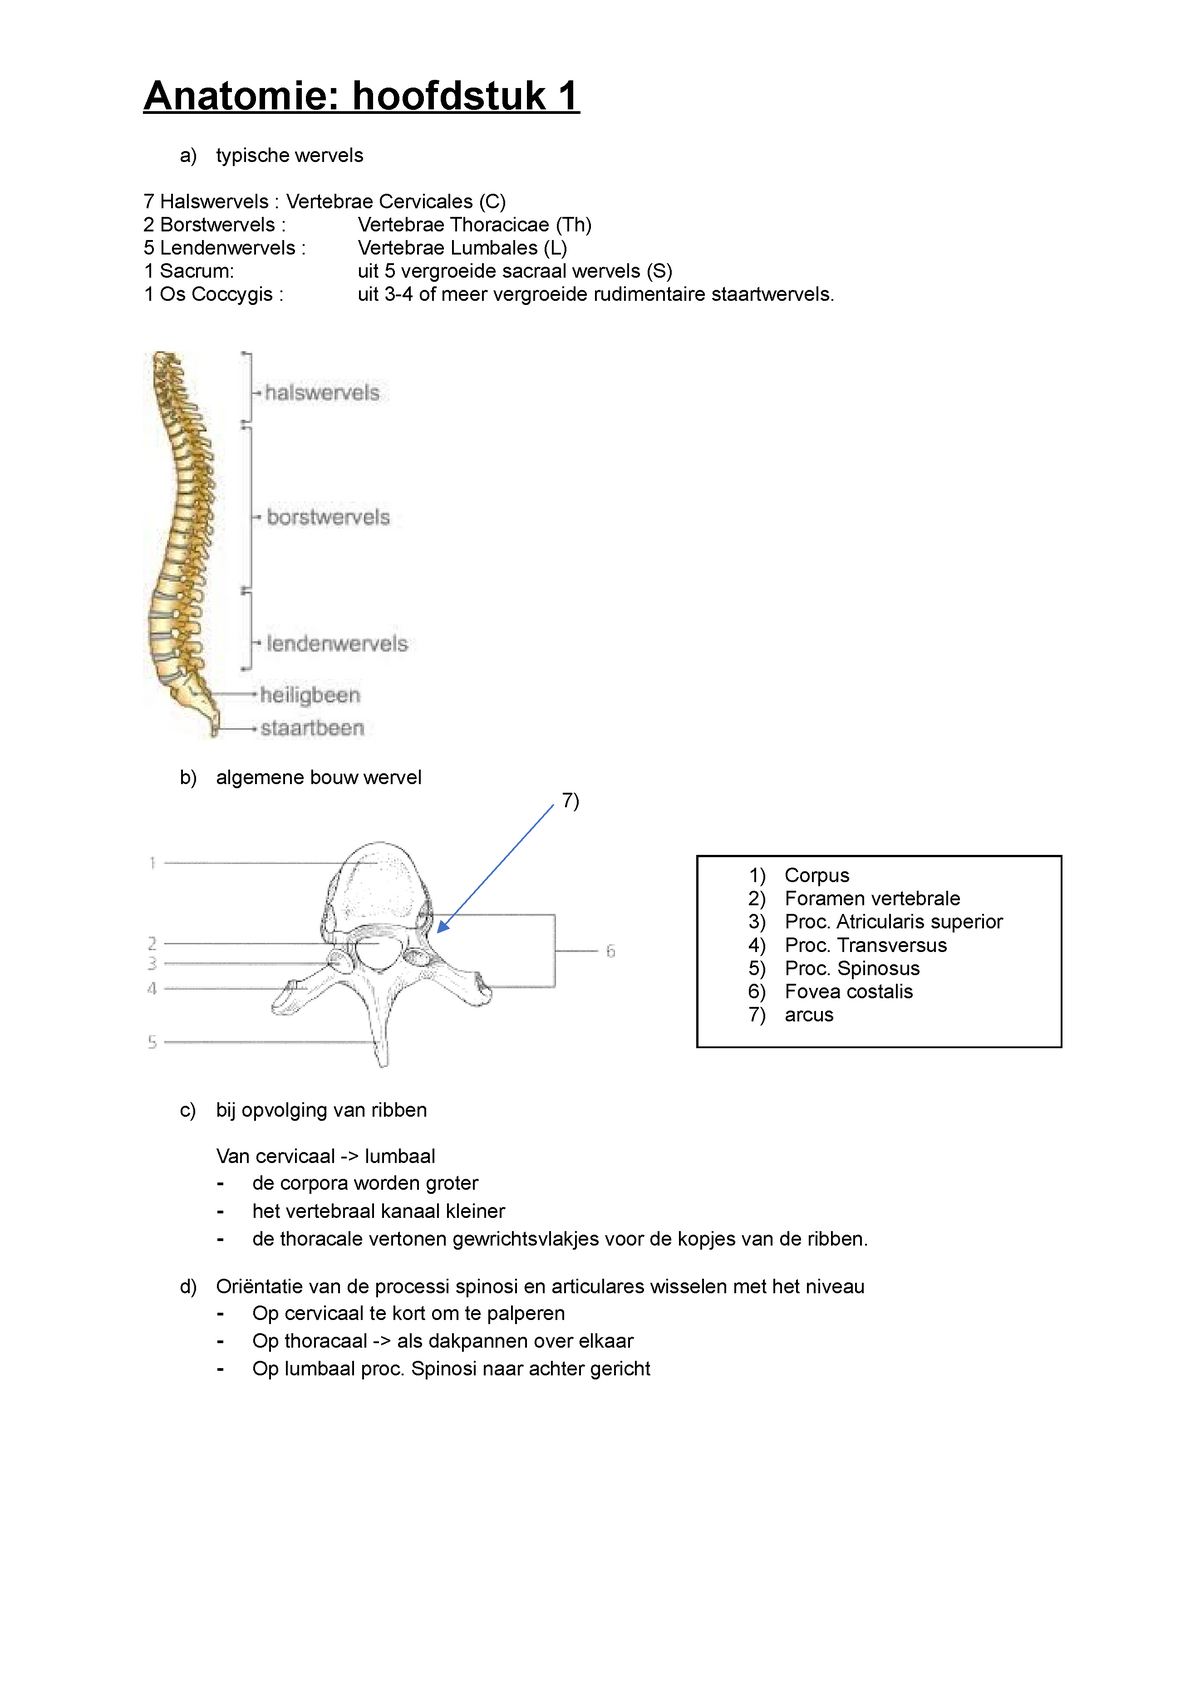 Anatmonie hoofdstuk 1 - a) typische wervels 7 Vertebrae Cervicales (C) Borstwervels - StuDocu